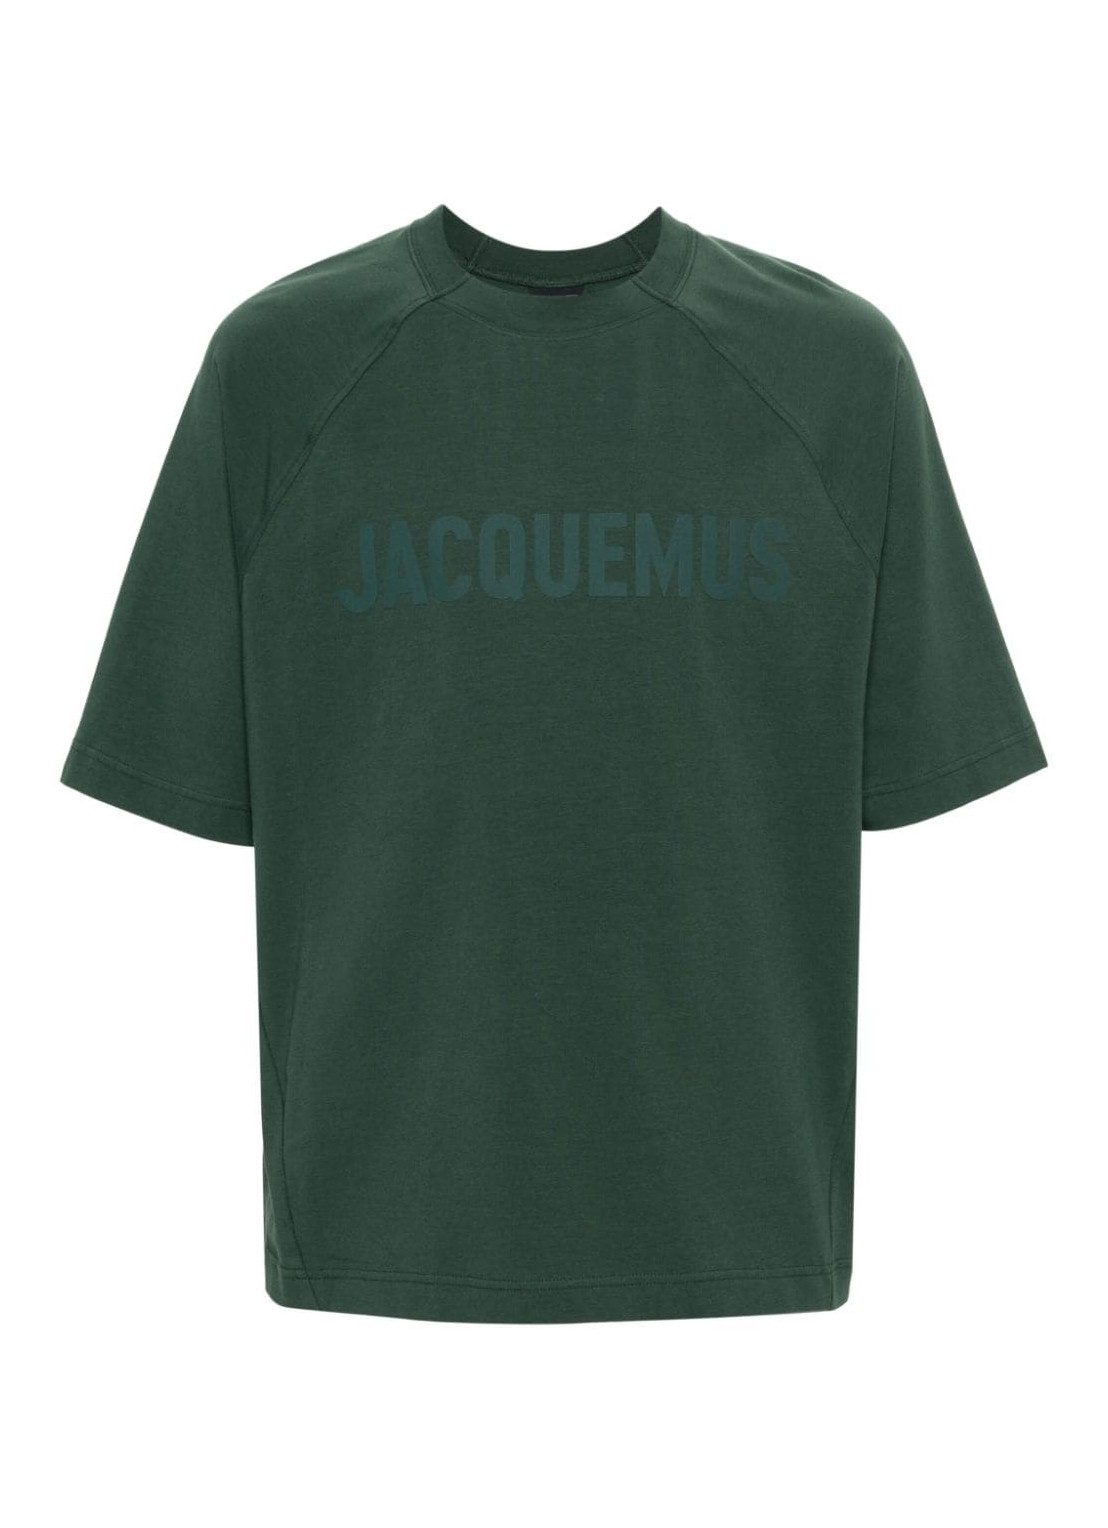 Camiseta jacquemus t-shirt man le tshirt typo 24e245js2122031 590 talla XL
 